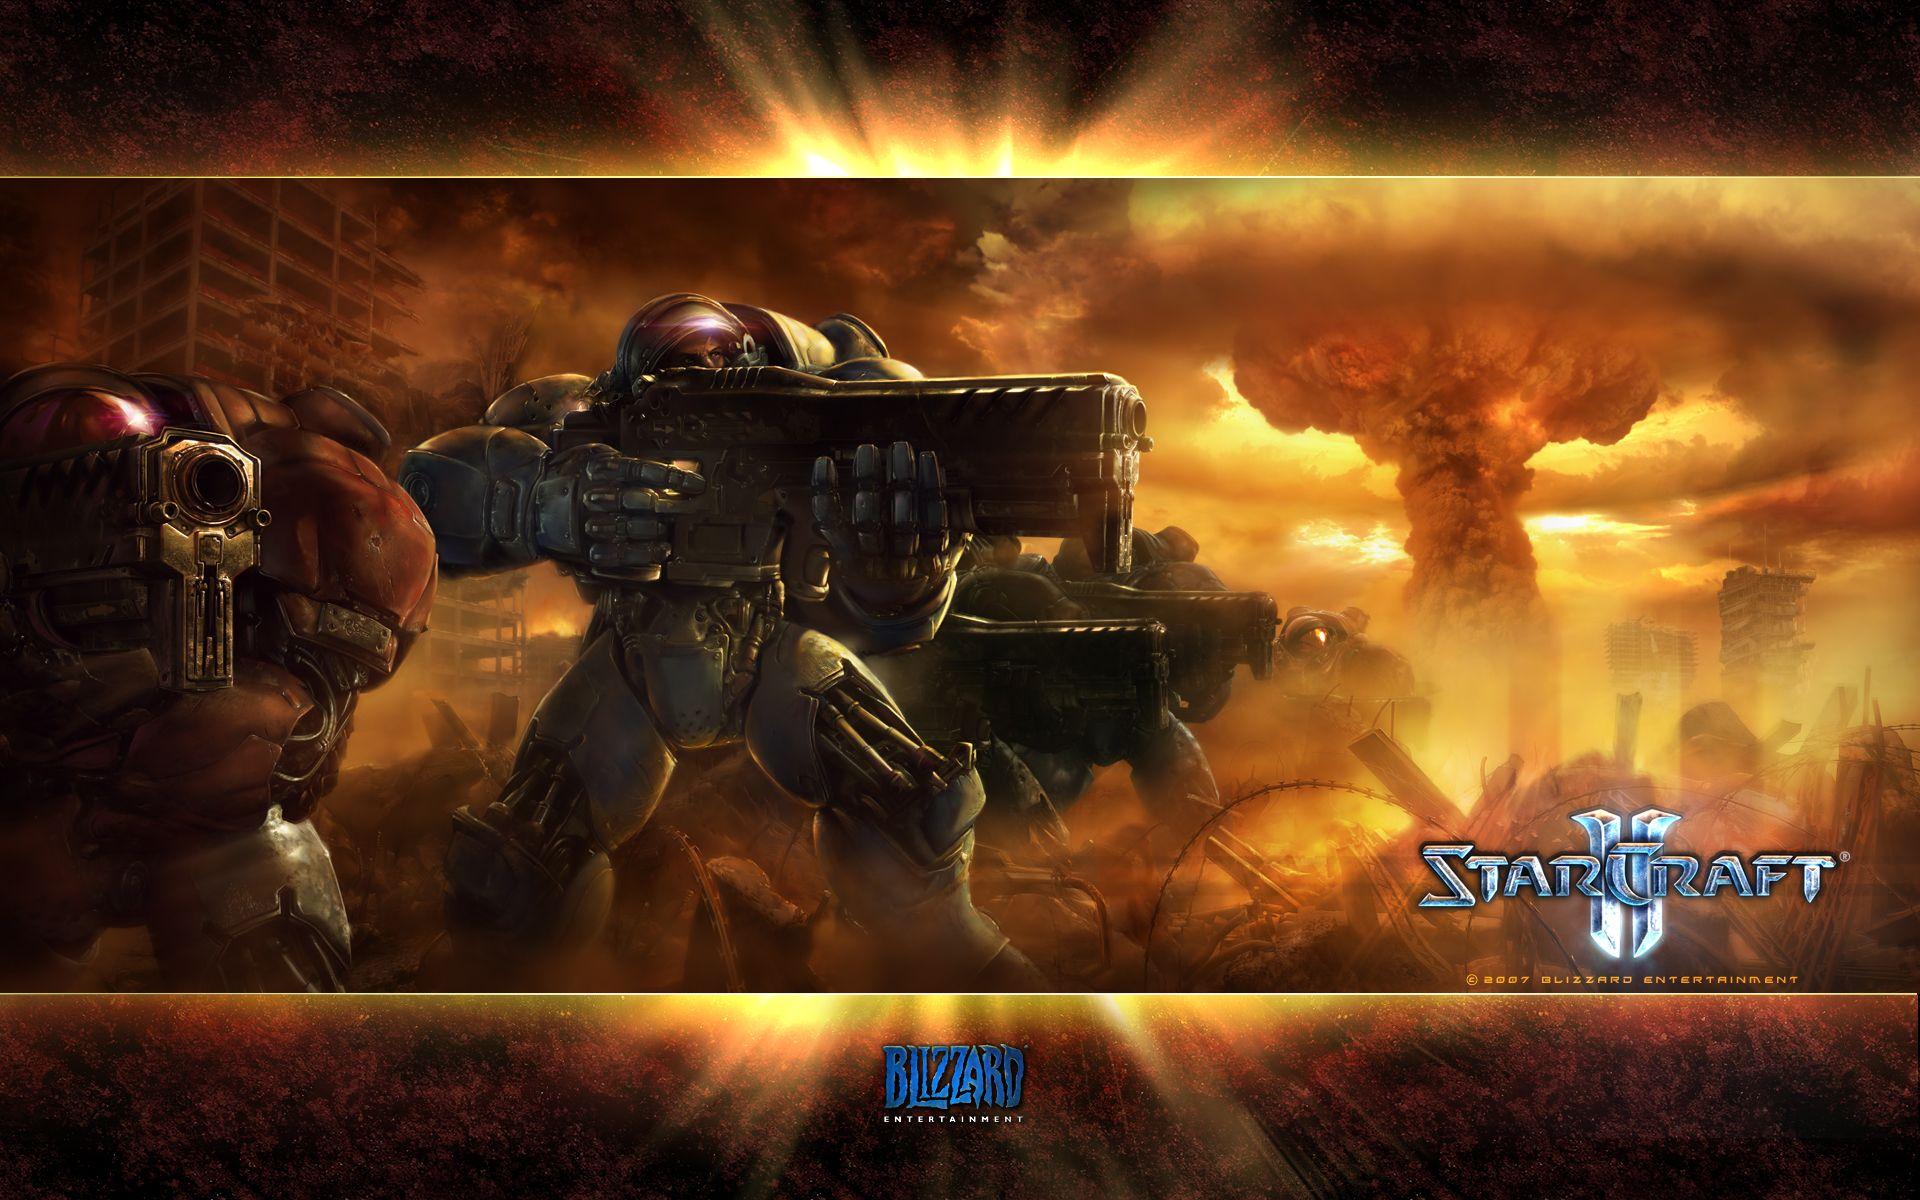 Download the Starcraft 2 Nuke Wallpaper, Starcraft 2 Nuke iPhone